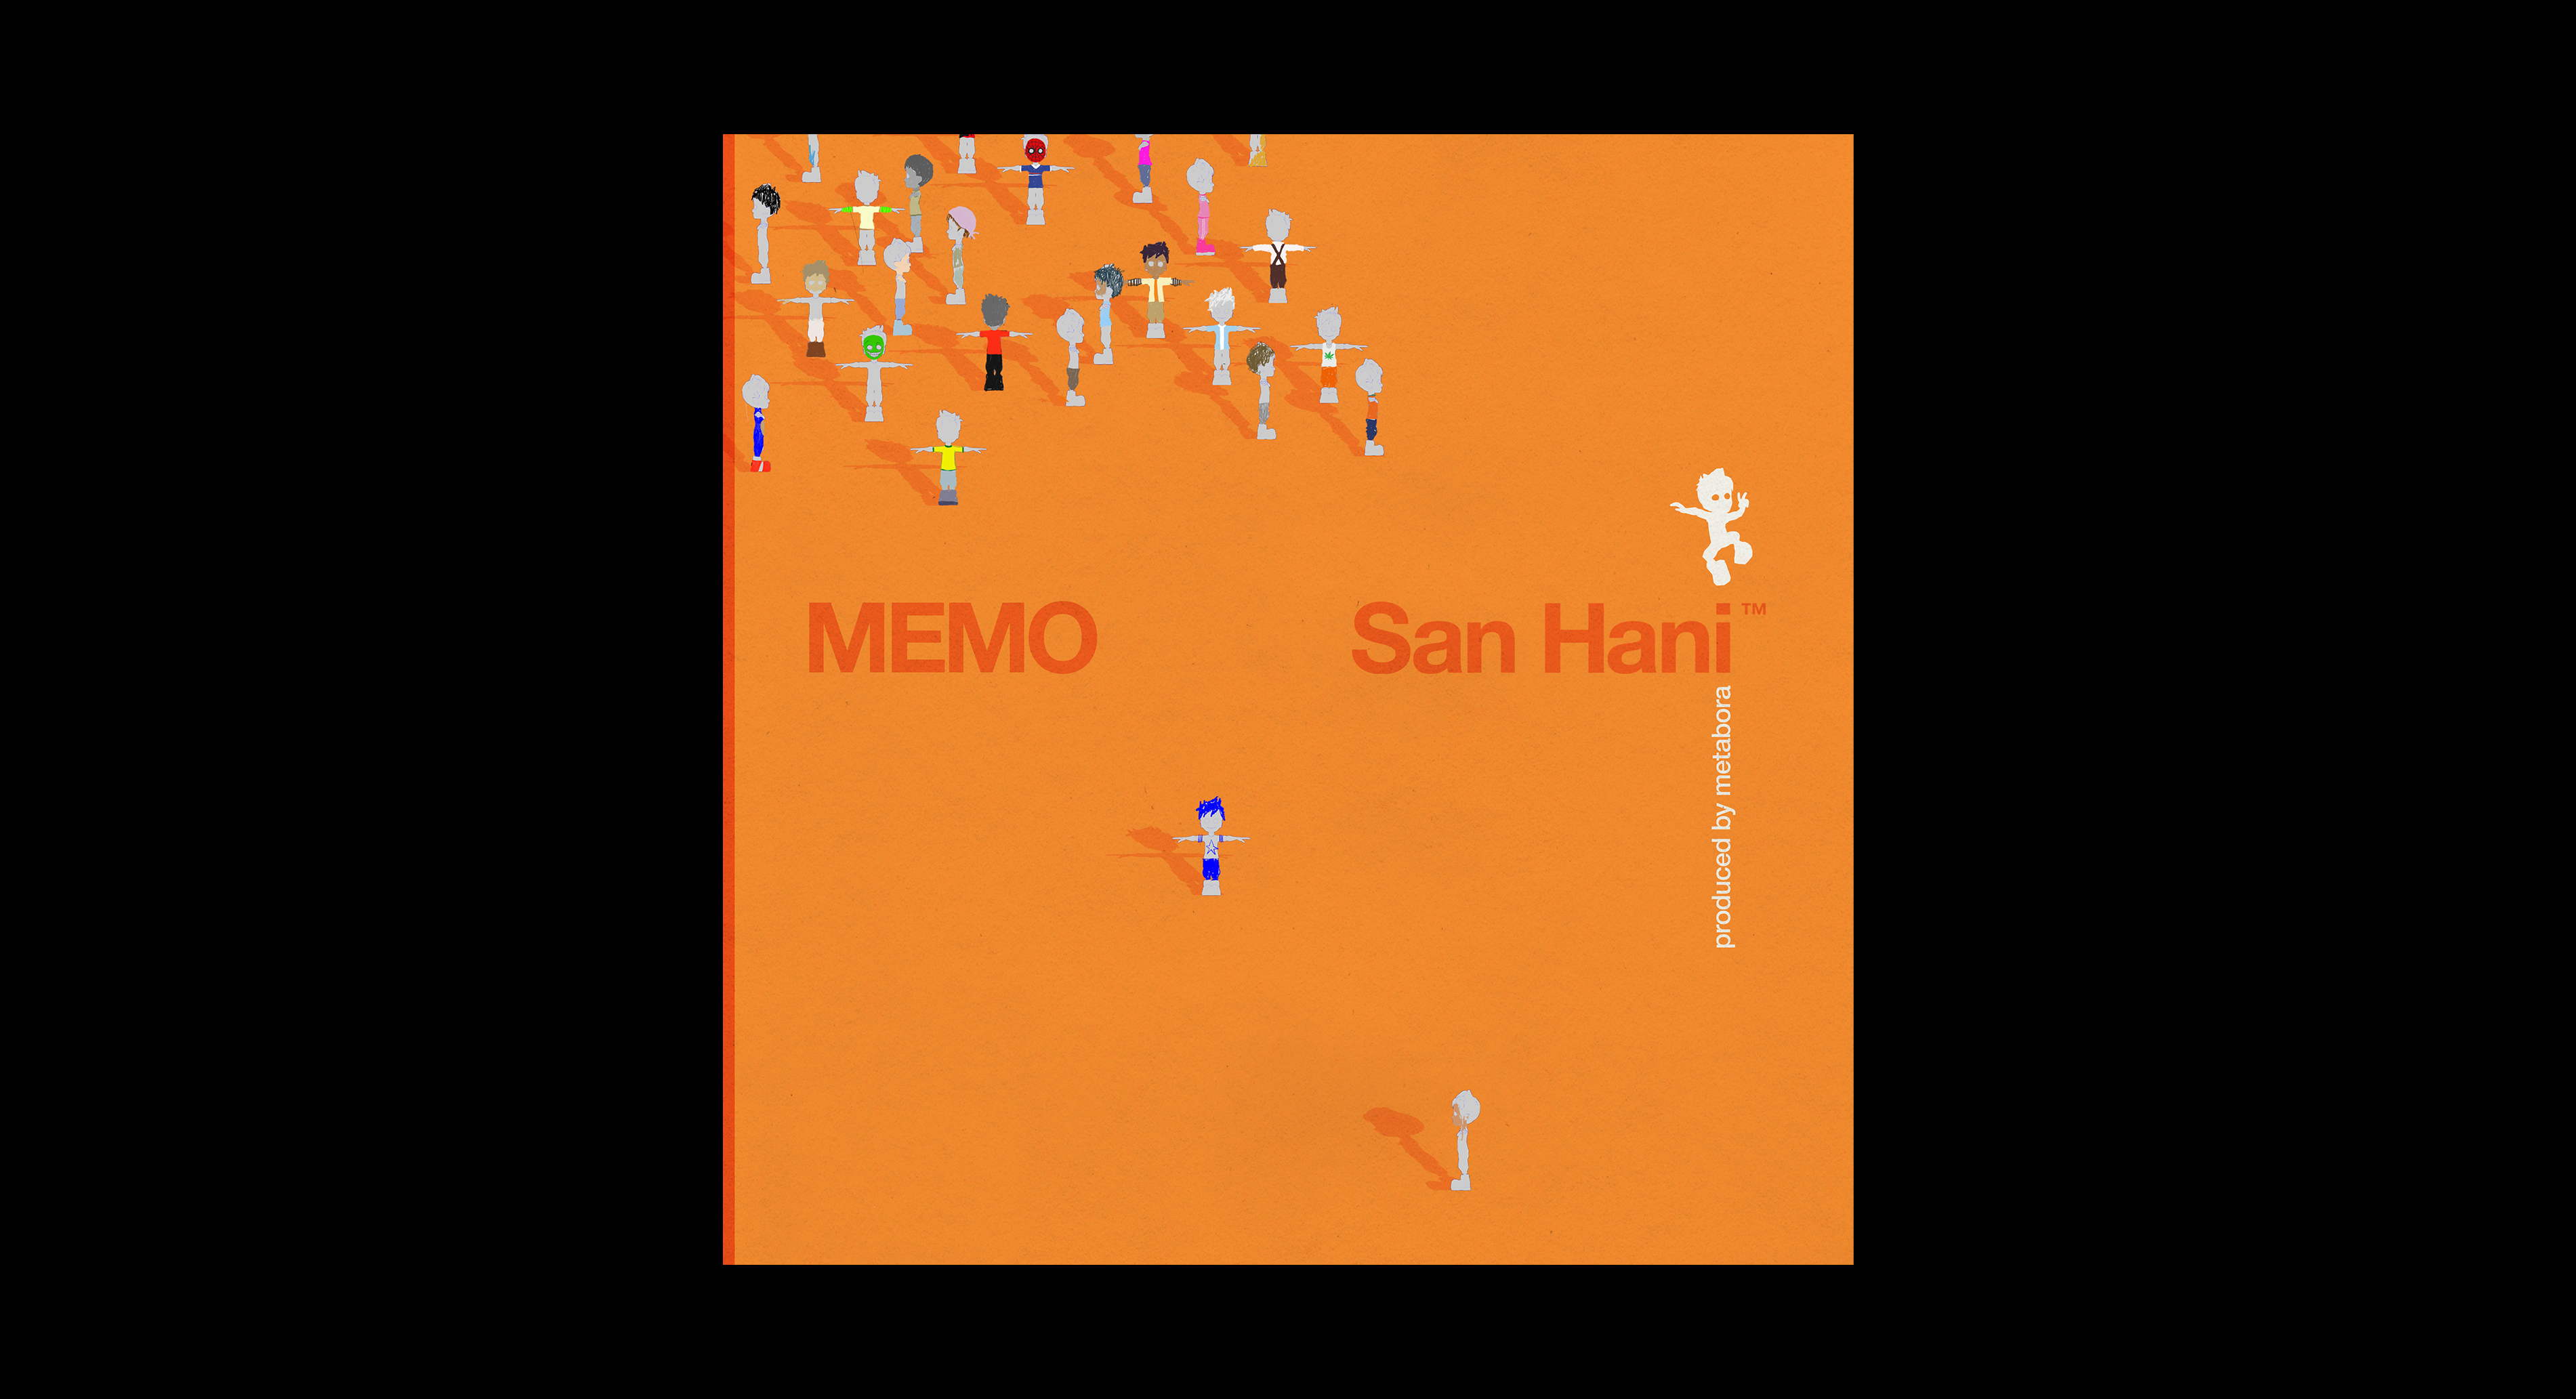 san hani and metabora graphic design for single cover